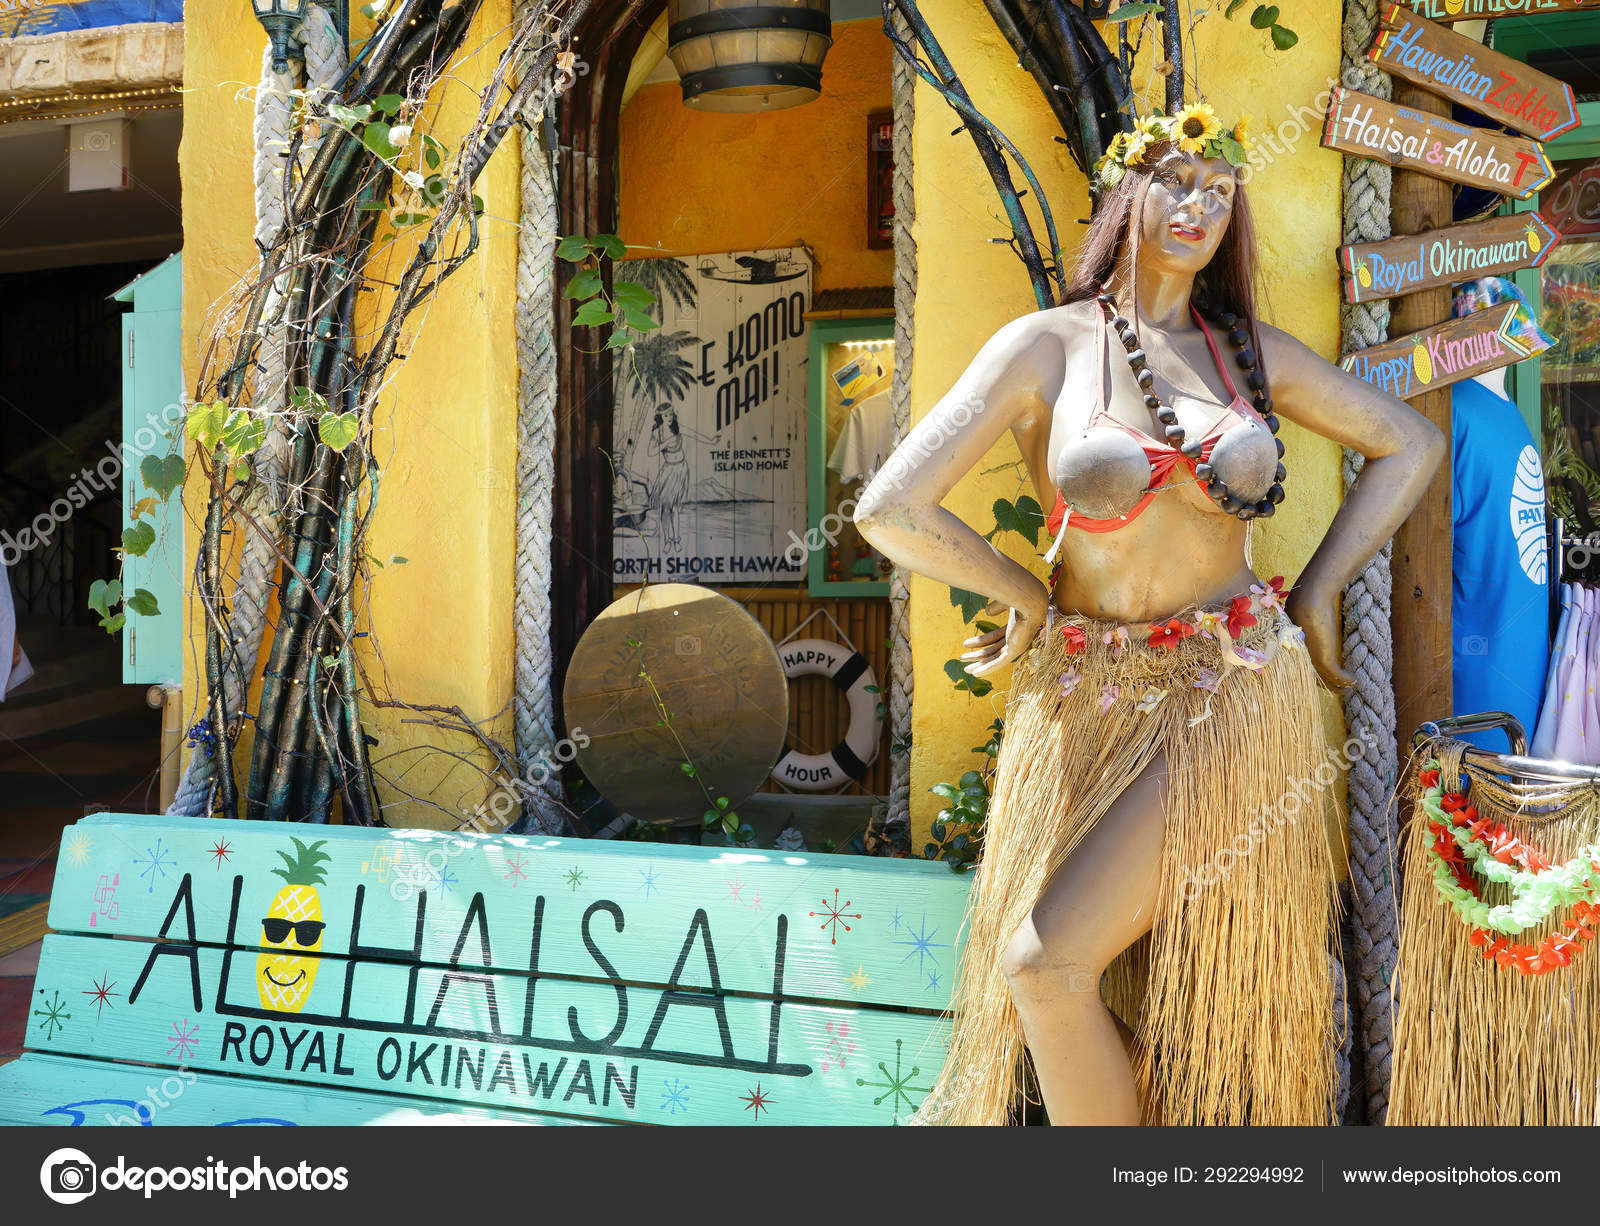 https://st4.depositphotos.com/18922582/29229/i/1600/depositphotos_292294992-stock-photo-mannequin-doll-tropical-dancer-wearing.jpg